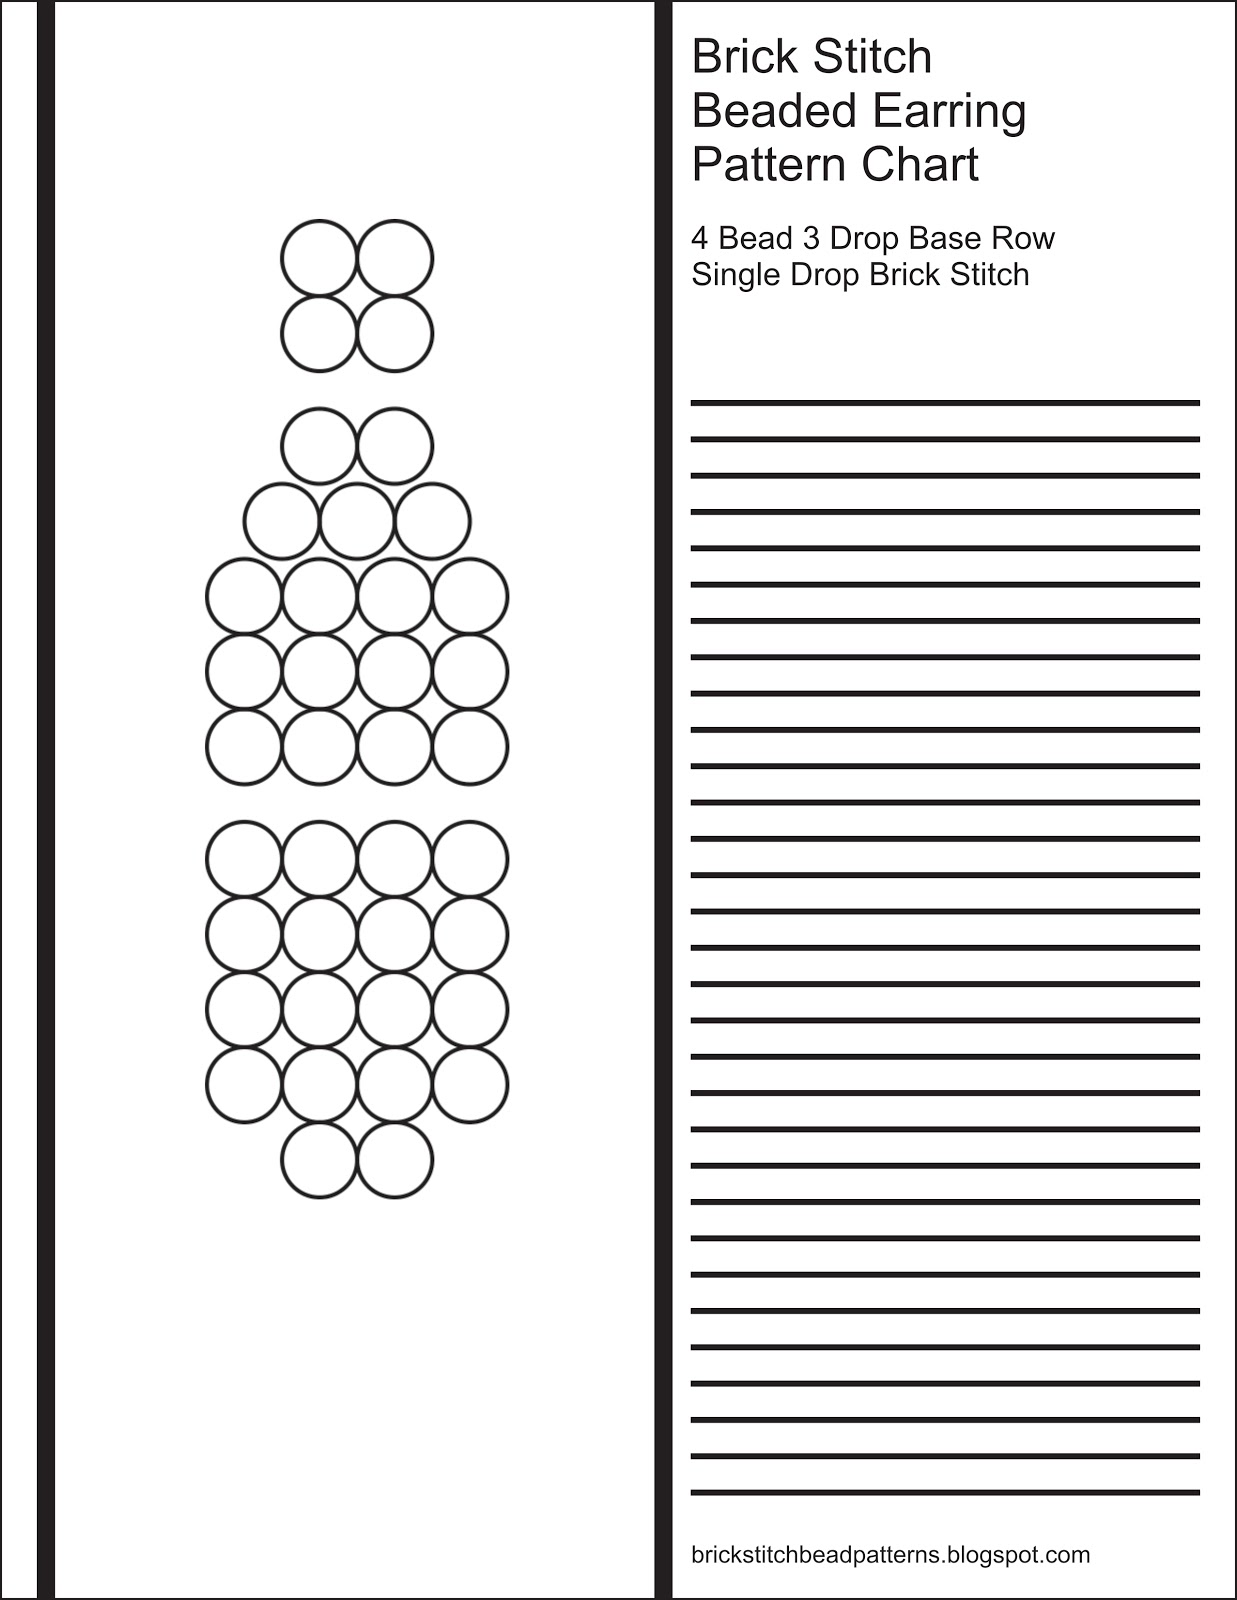 brick-stitch-bead-patterns-journal-4-bead-3-drop-base-row-blank-beaded